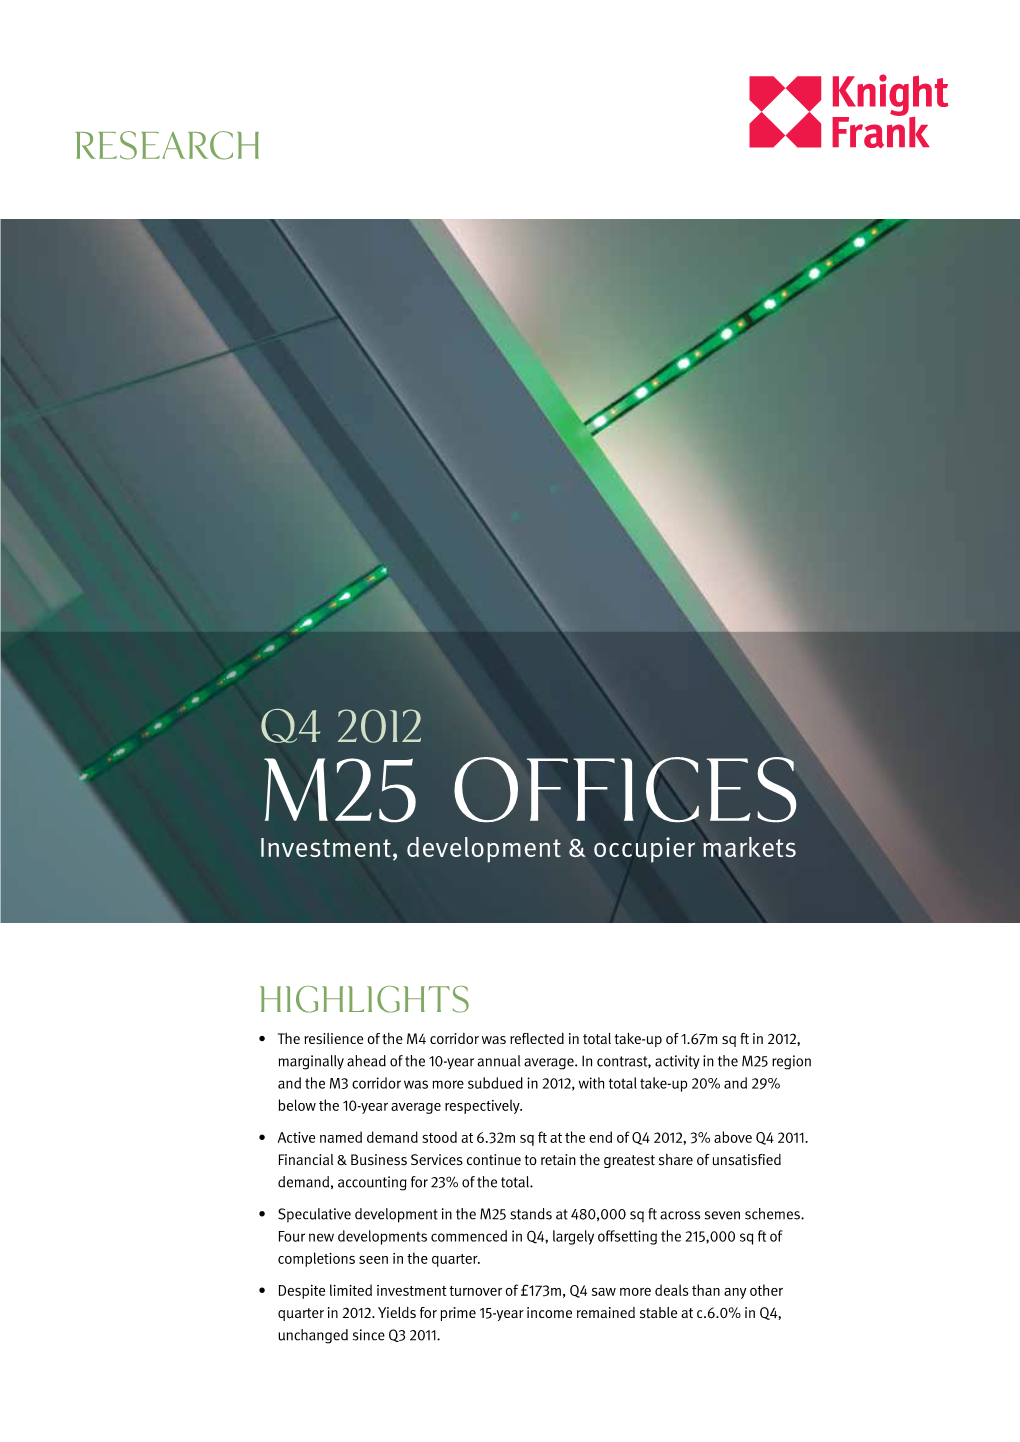 M25 OFFICES Investment, Development & Occupier Markets